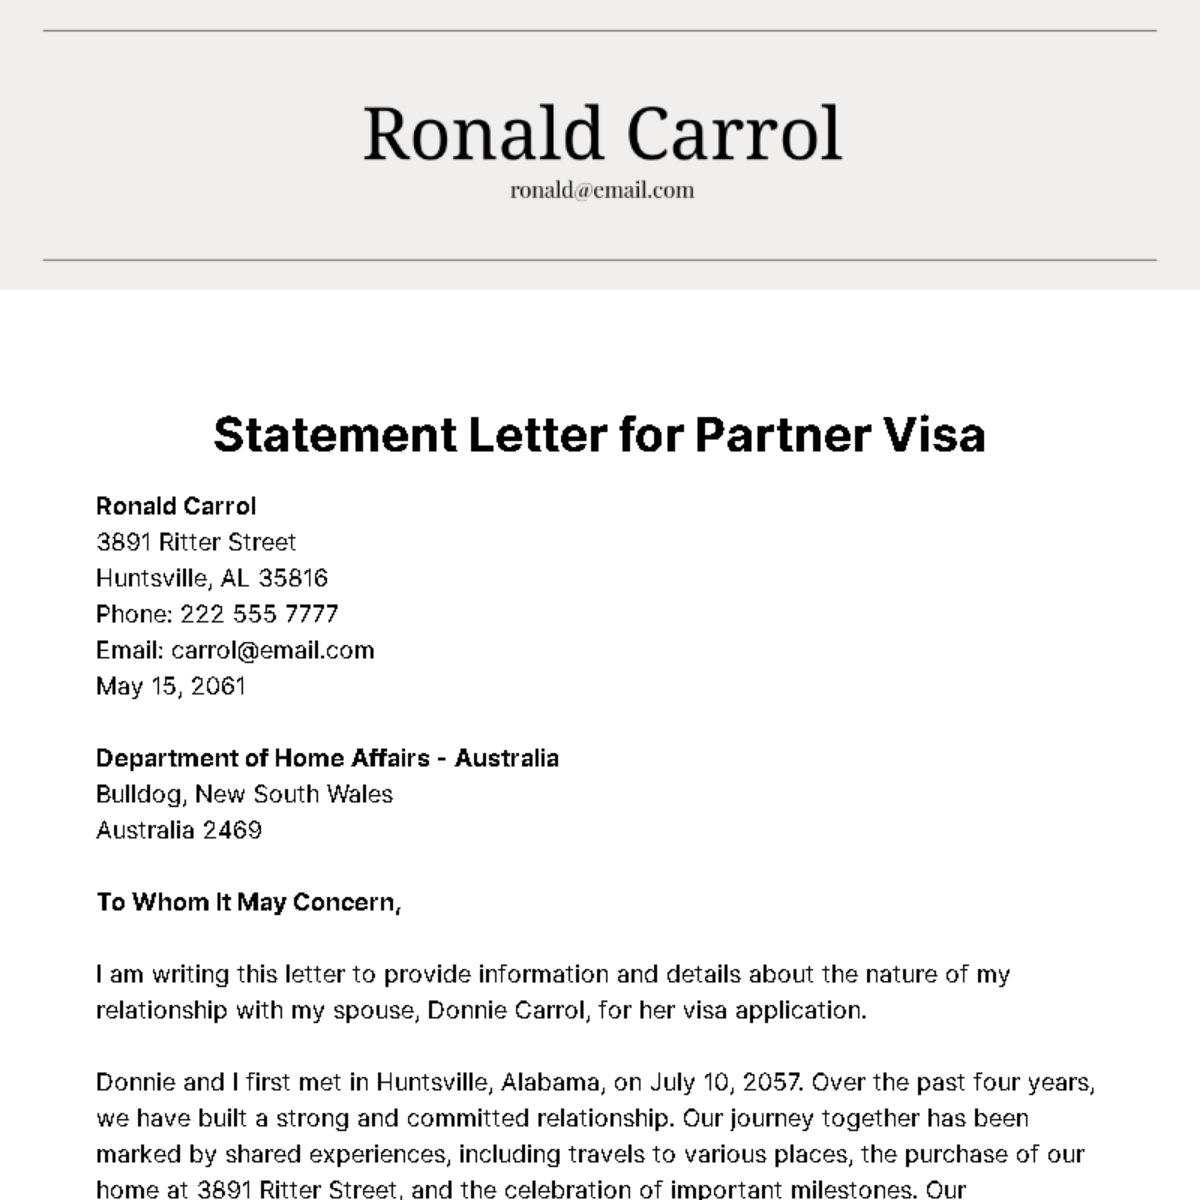 Statement Letter for Partner Visa Template